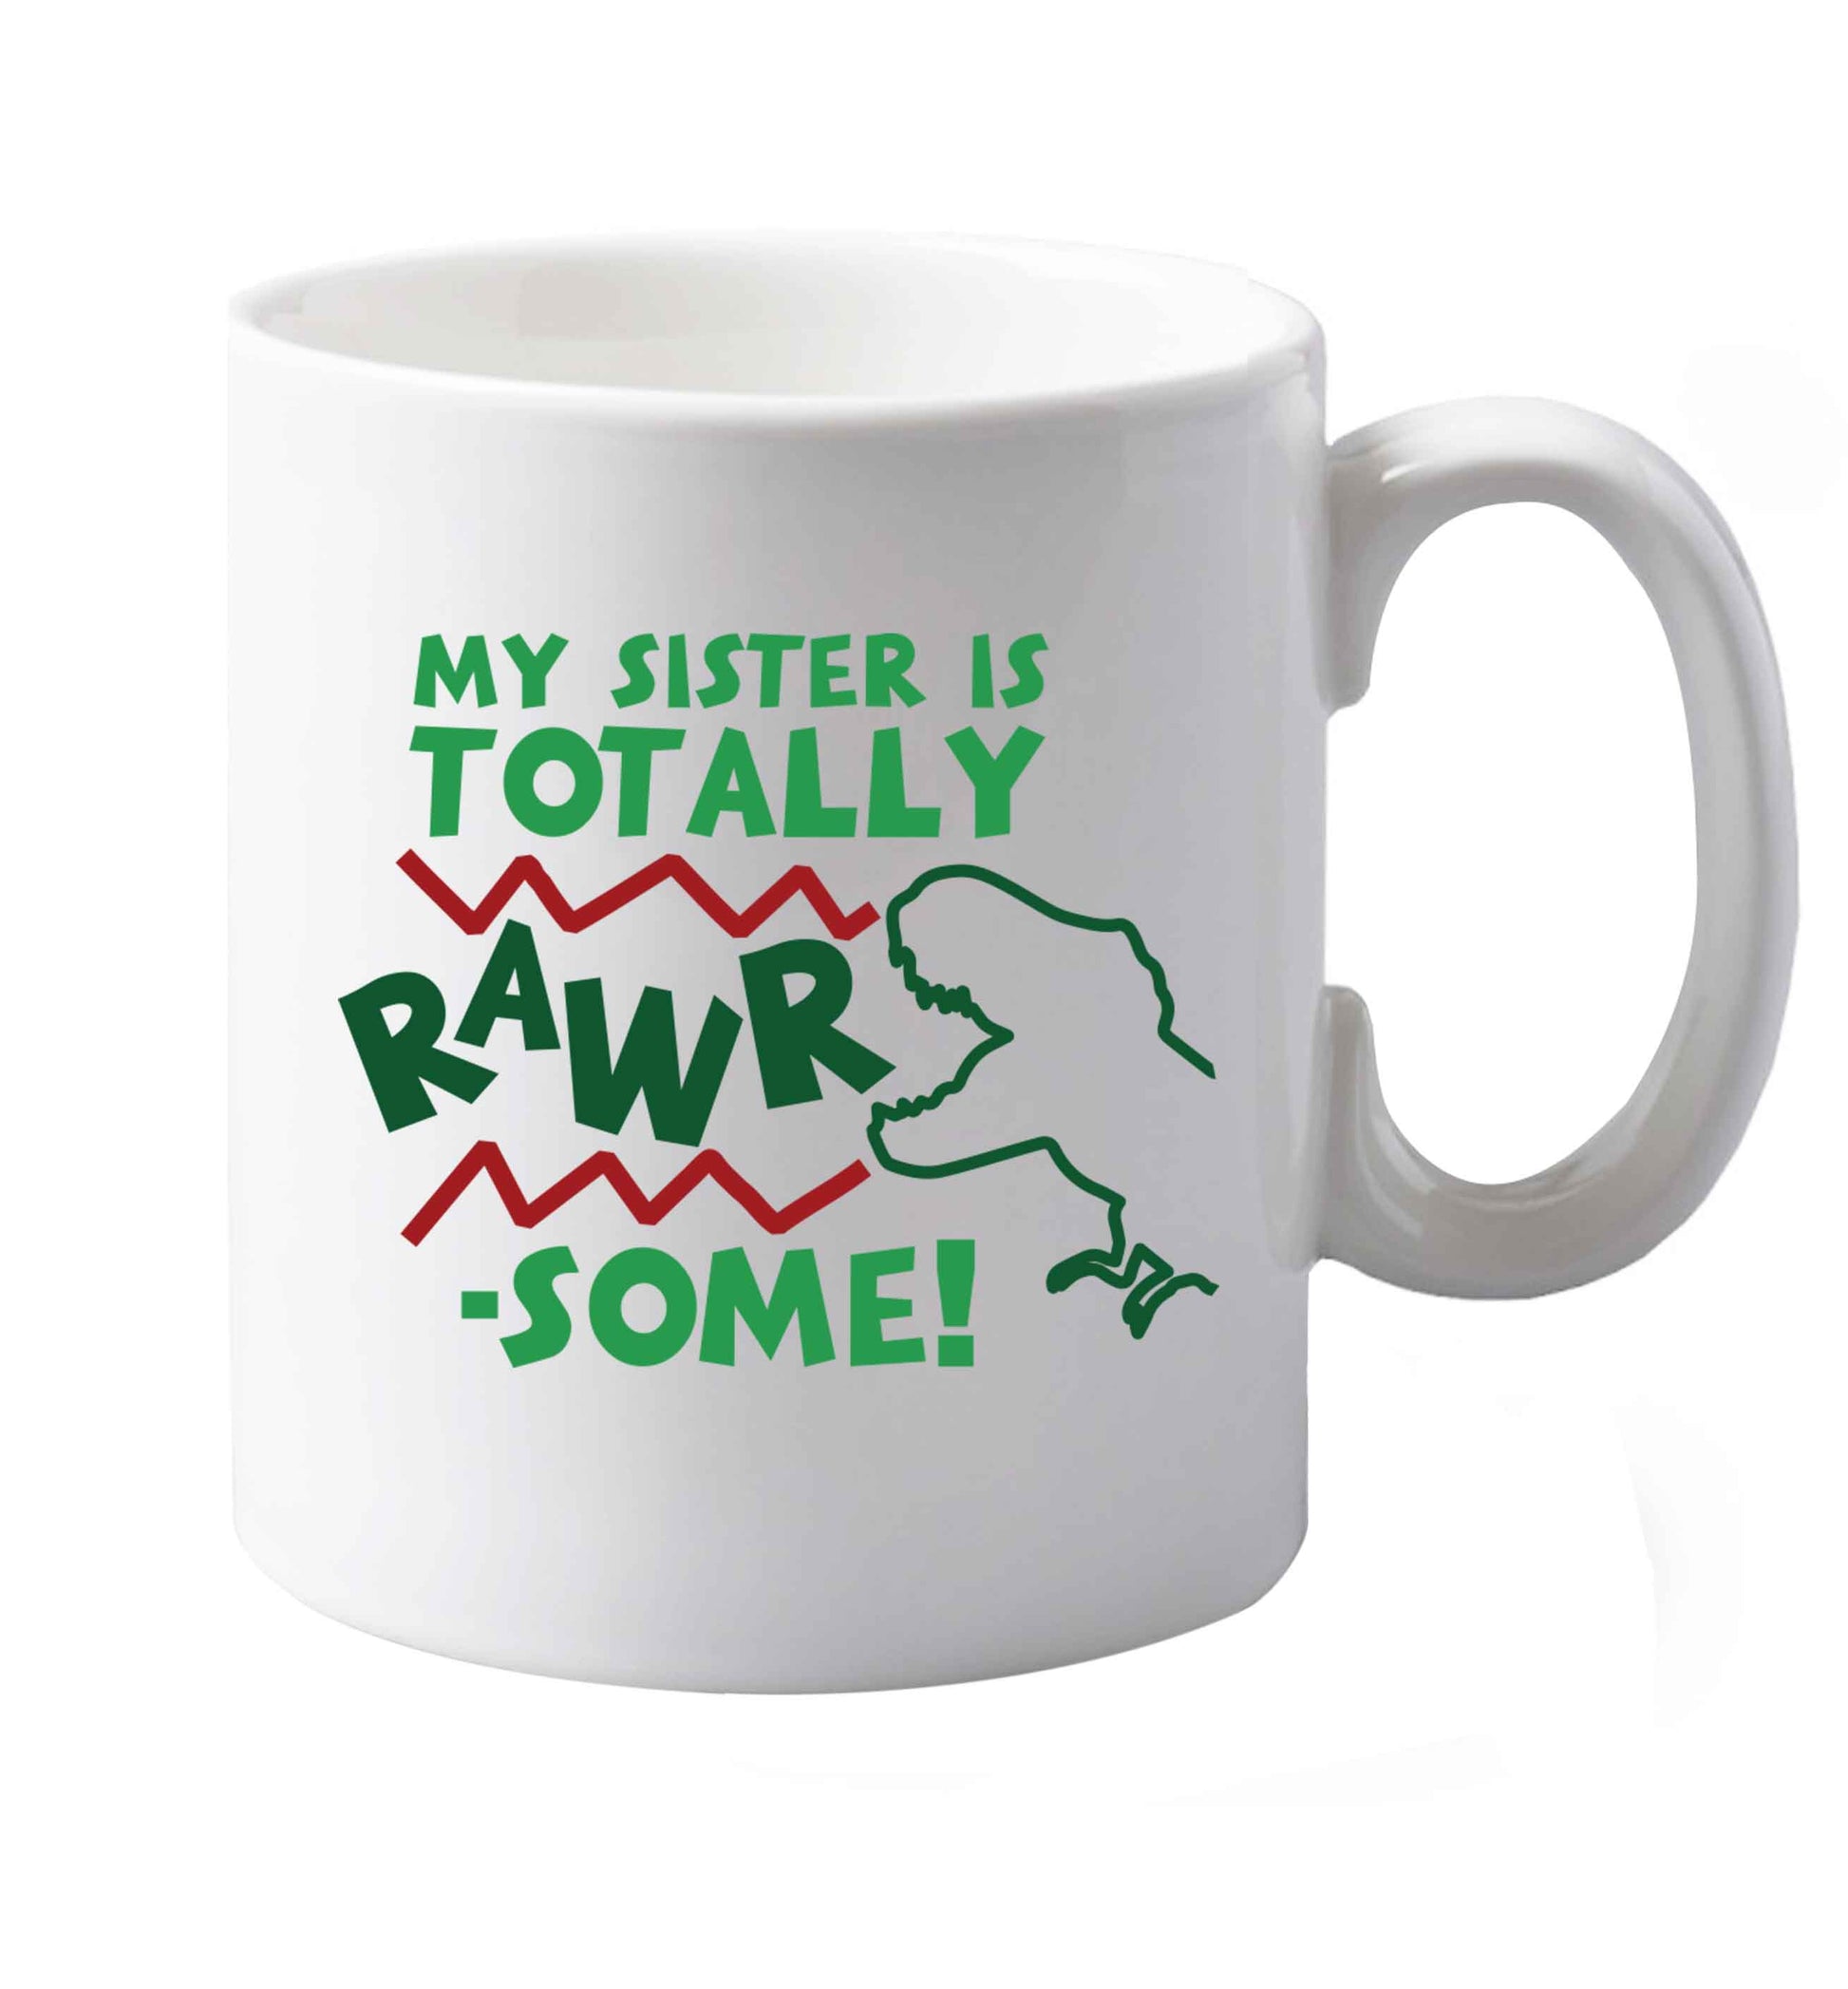 10 oz My sister is totally rawrsome ceramic mug both sides